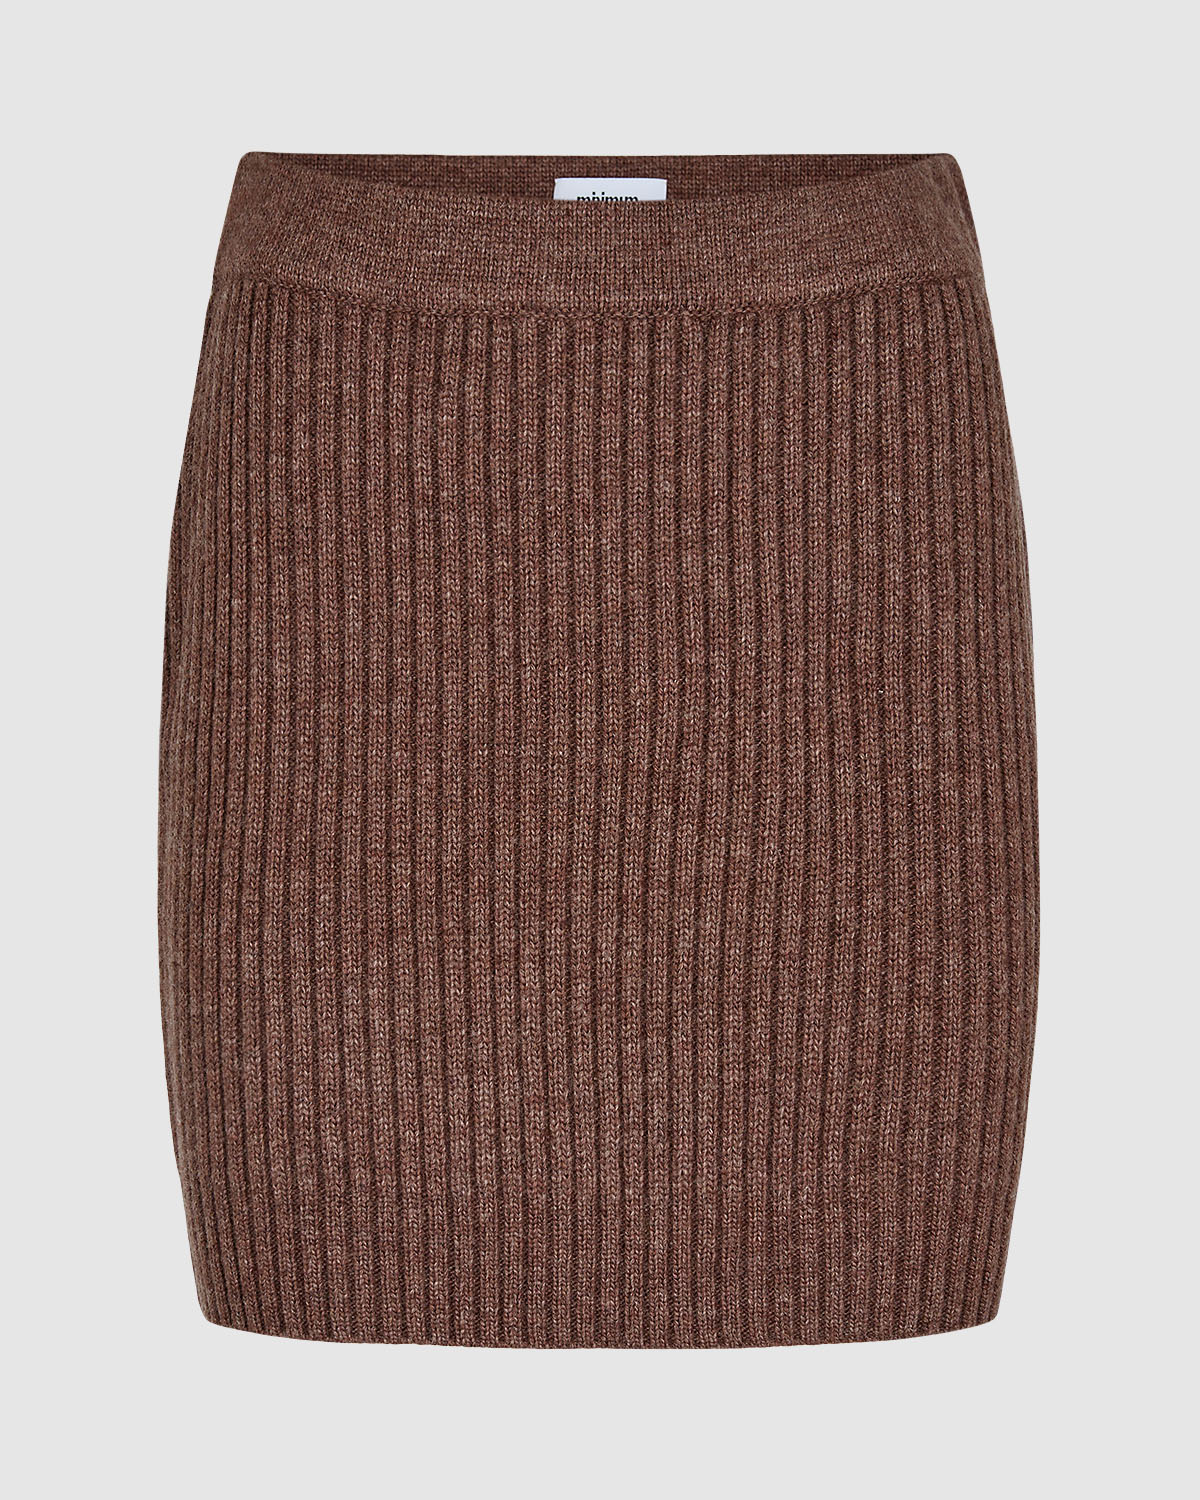 Sandies Knit Skirt Brown - Minimum